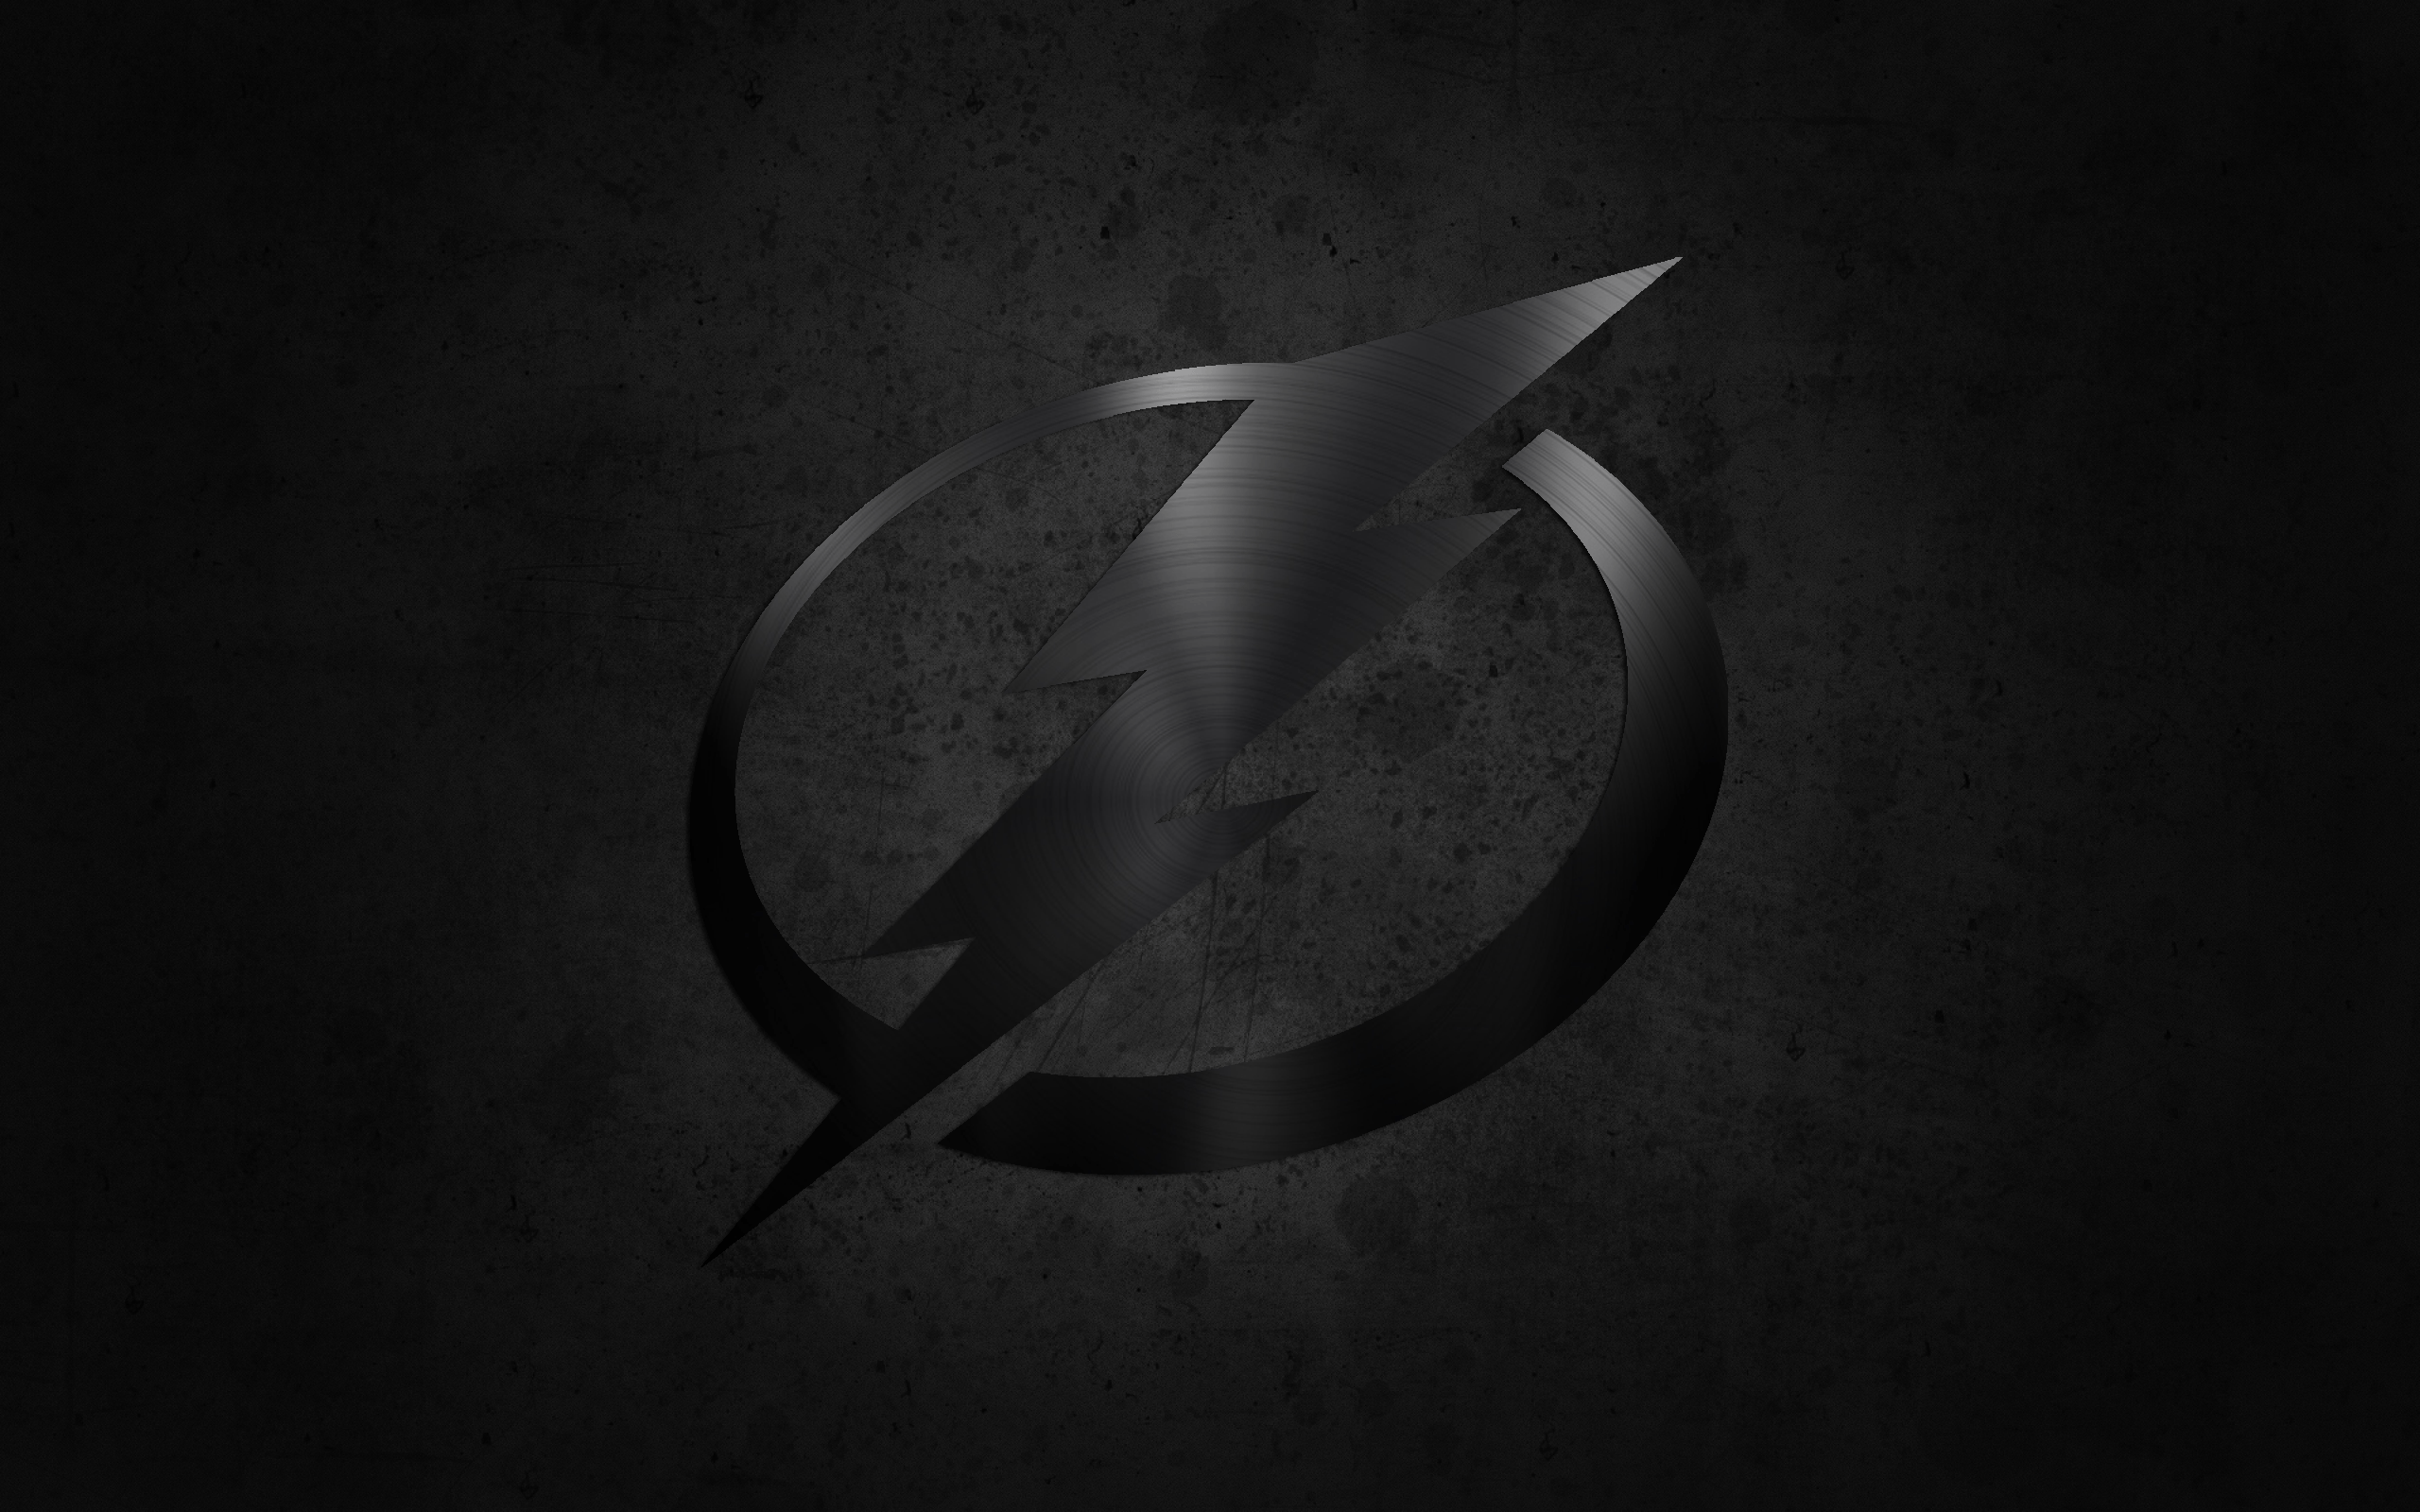 Cool Lightning Logo - Got bored at work and made a Lightning logo wallpaper